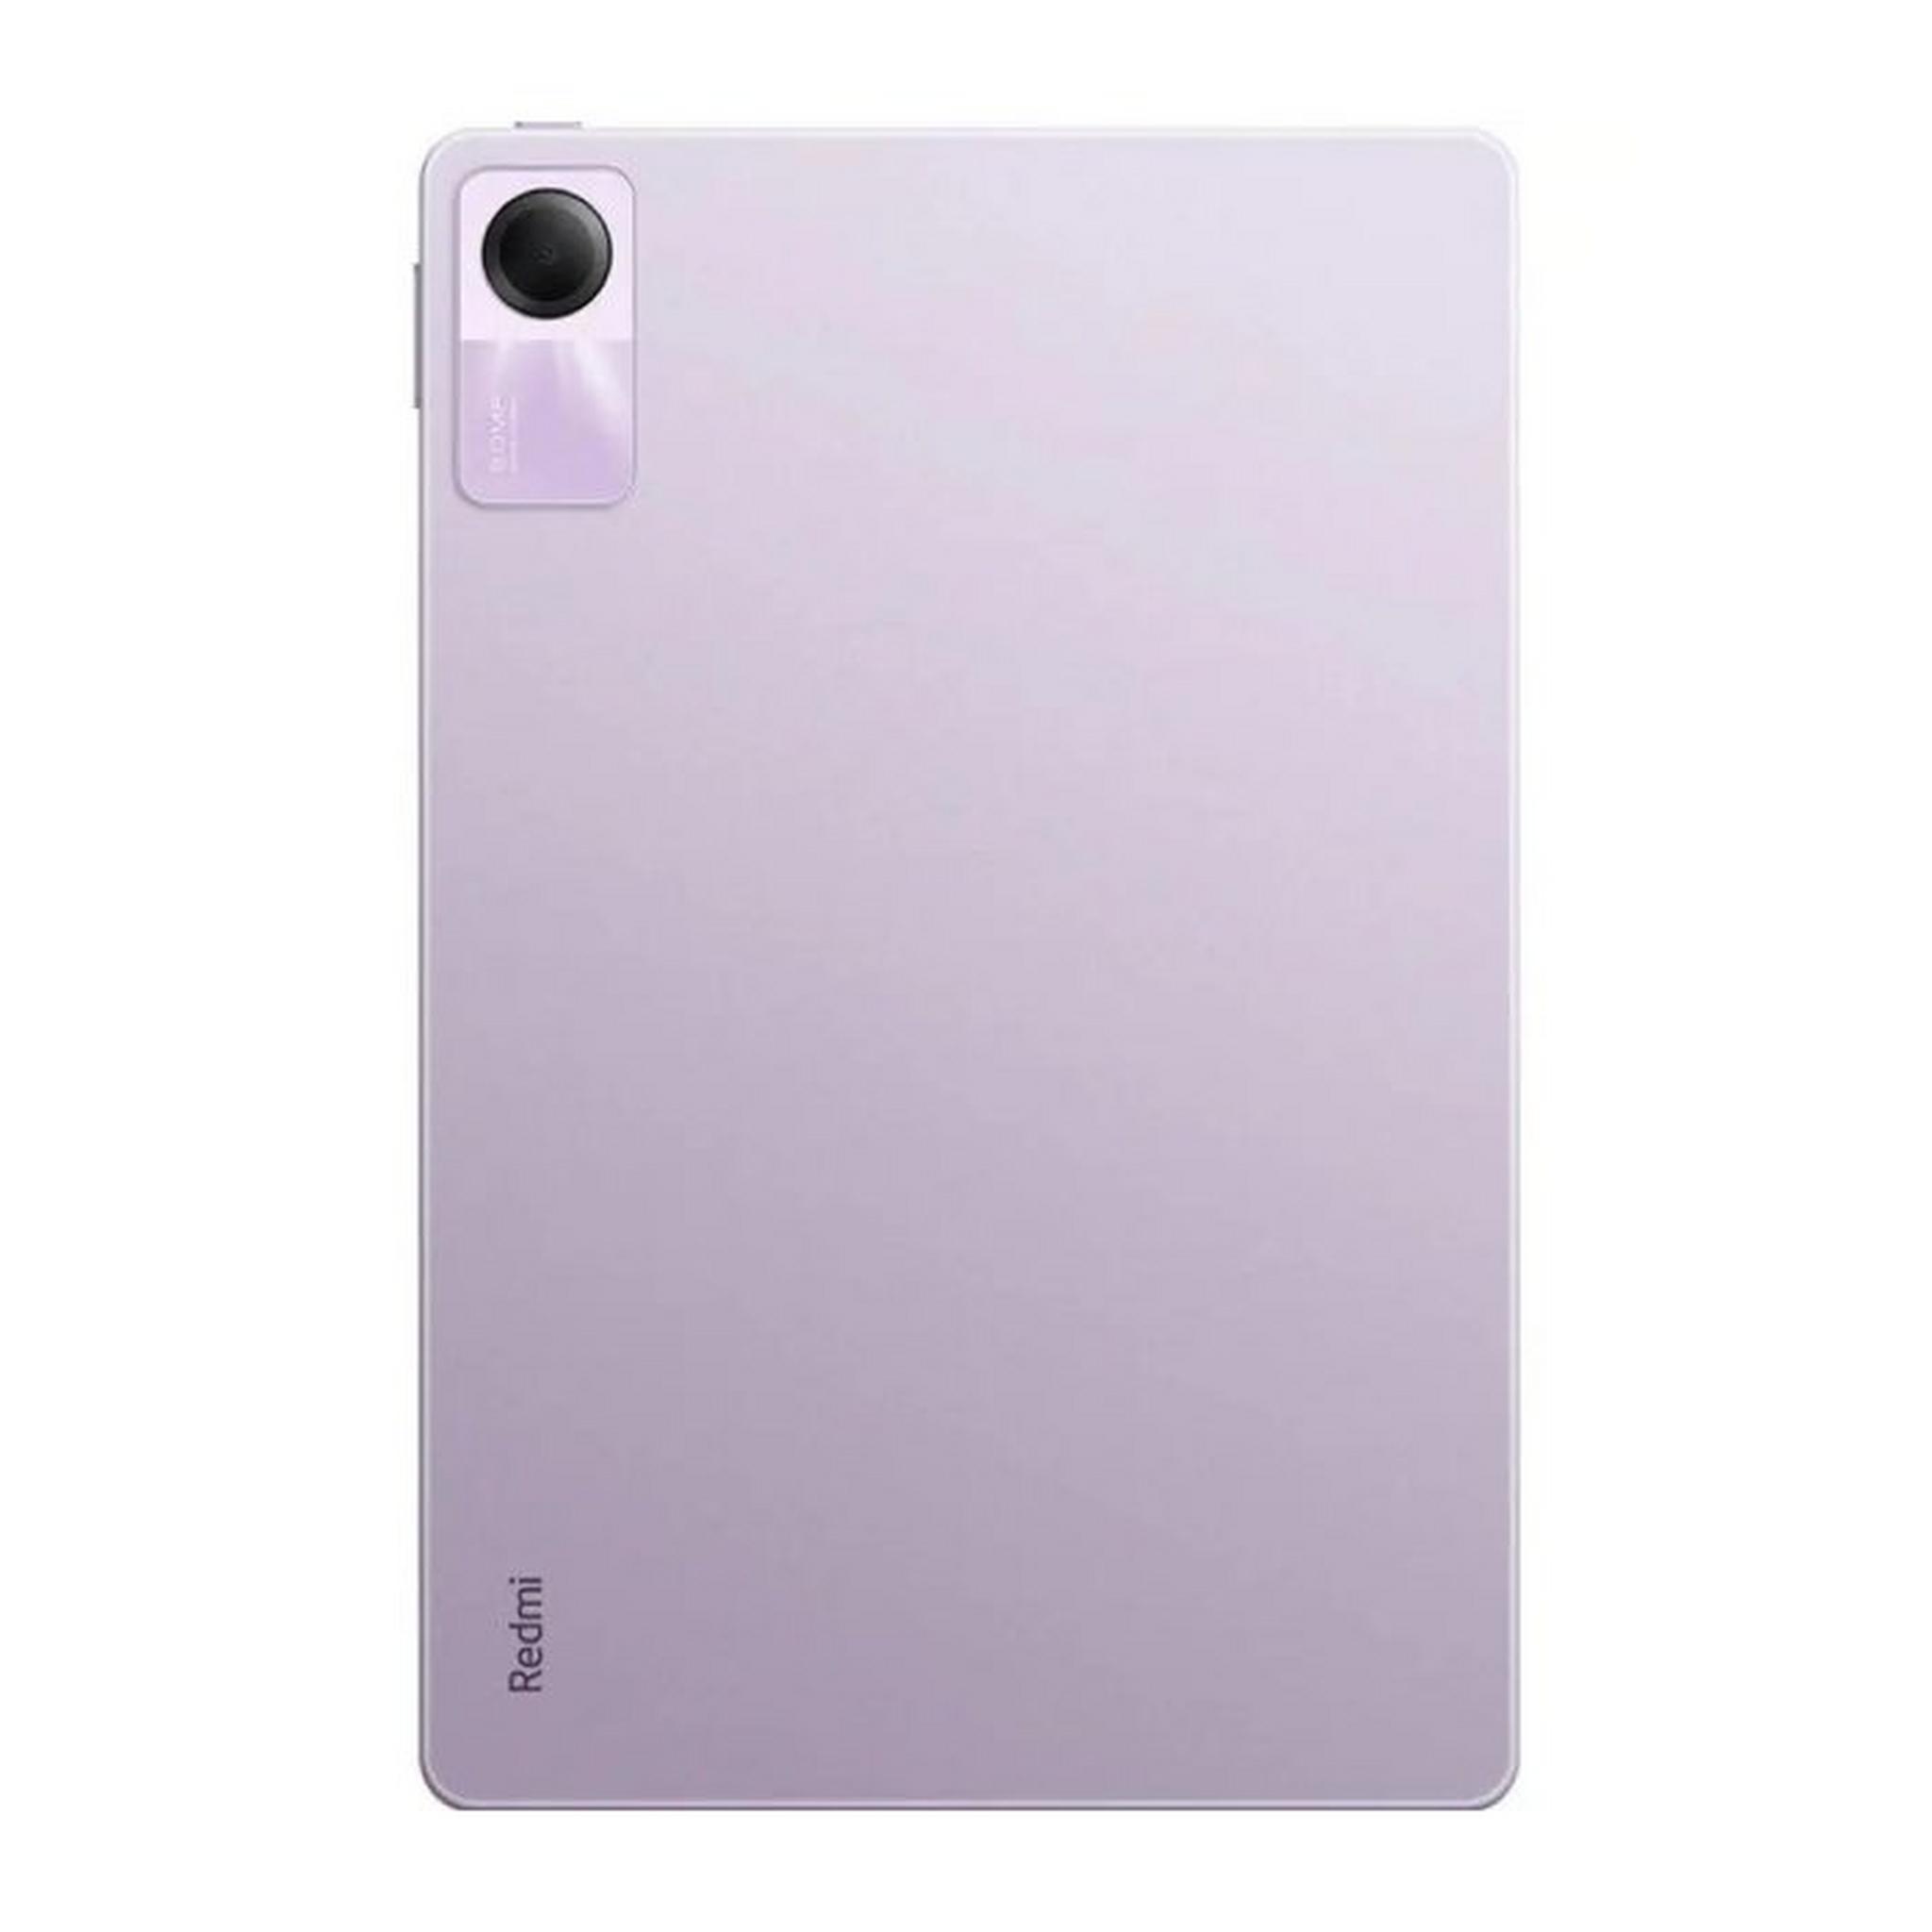 XIAOMI Redmi PAD-SE Tablet, 11-inch, 8GB RAM, 256GB, Wi-Fi, VHU4614EN - Lavander Purple